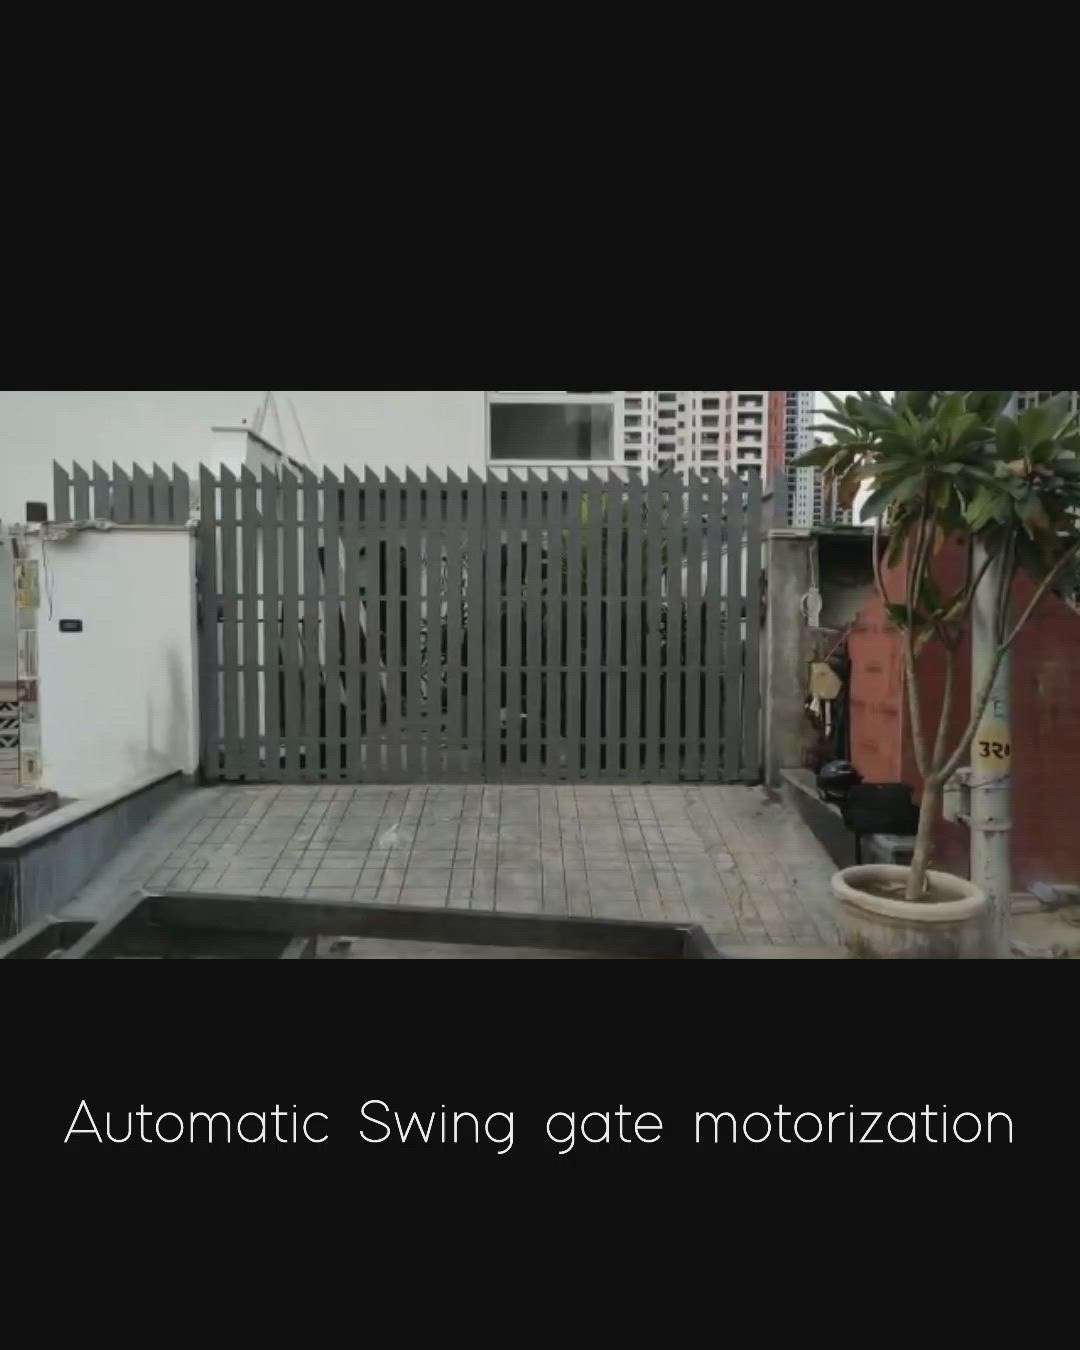 Motorization Swing gate By Cleub Automation 
 #smarthomes #HomeAutomation #InteriorDesigner #SwingGateMotors #gateautomation #Architectural&Interior #Architect #HomeAutomation #cleubautomation #cleub